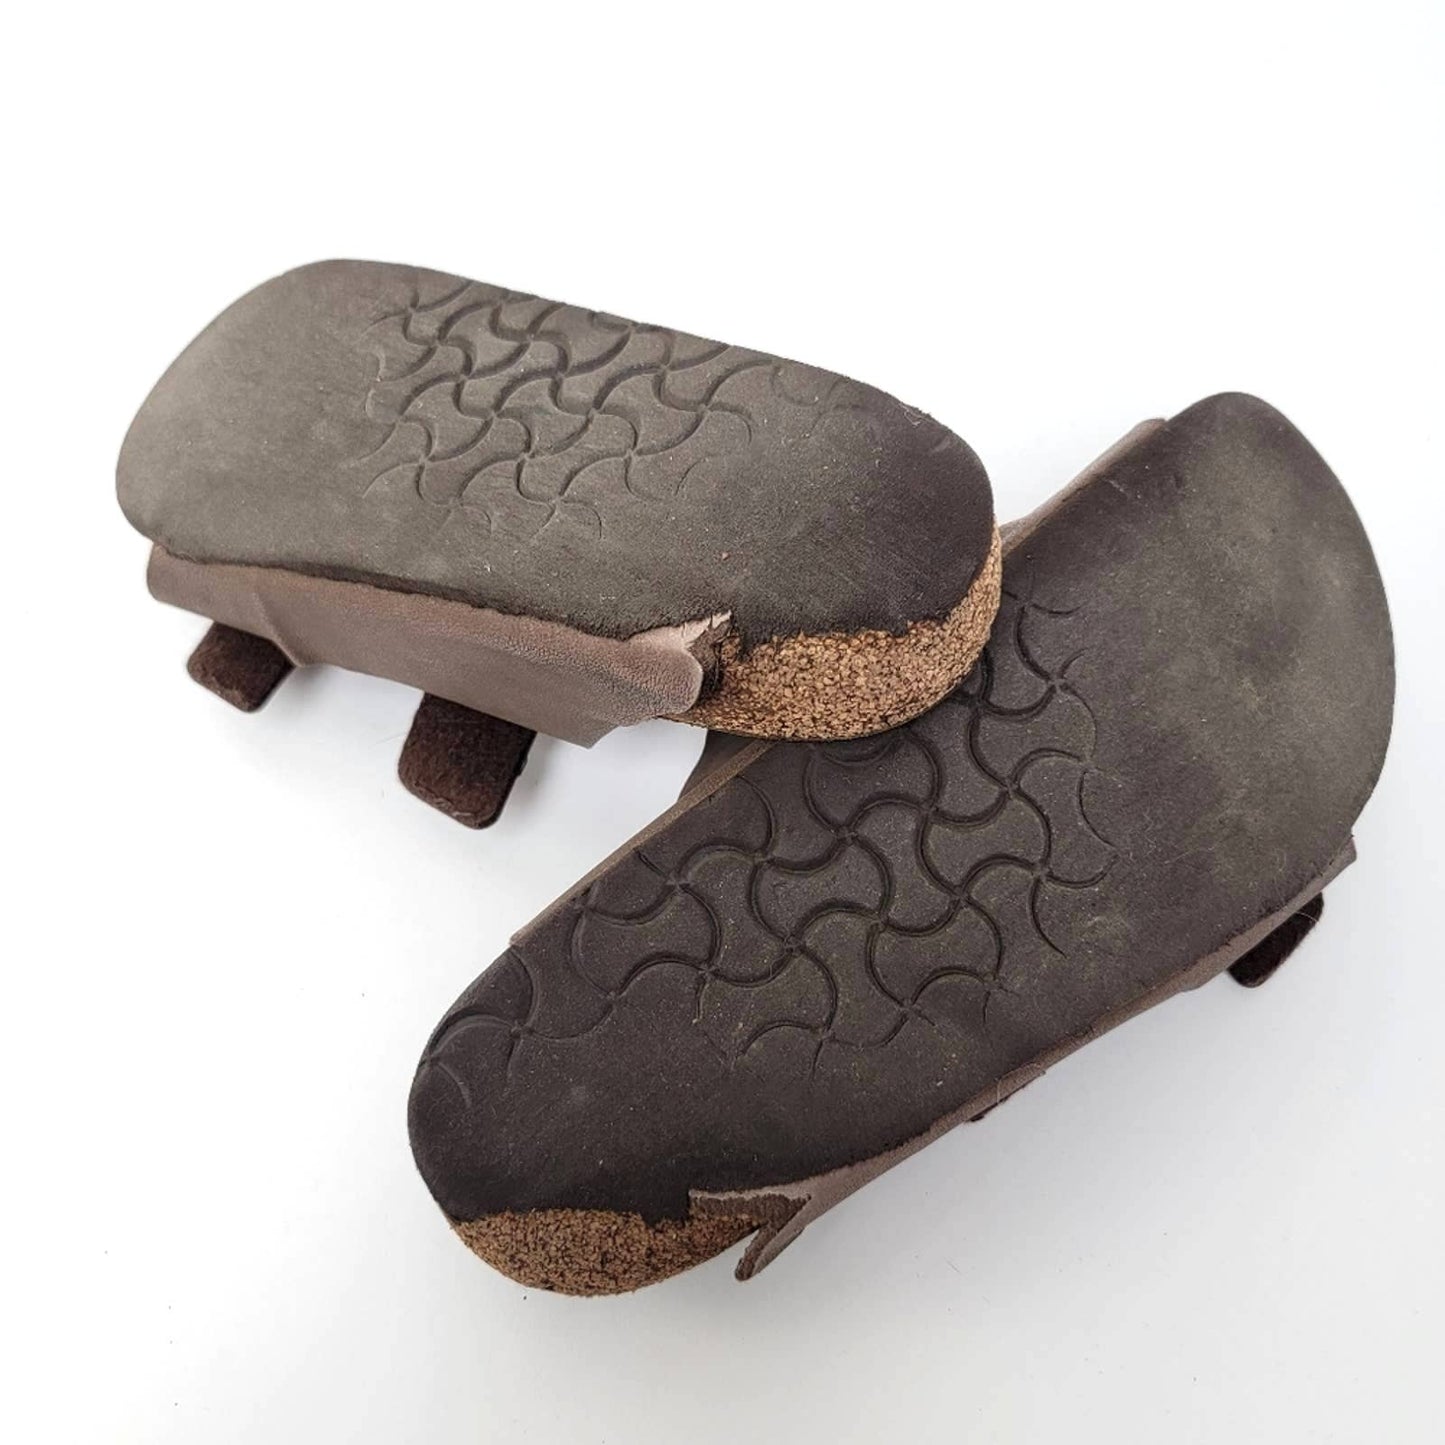 Birkenstock Mayari Birko-Flor Tobacco Brown Cognac Sandals